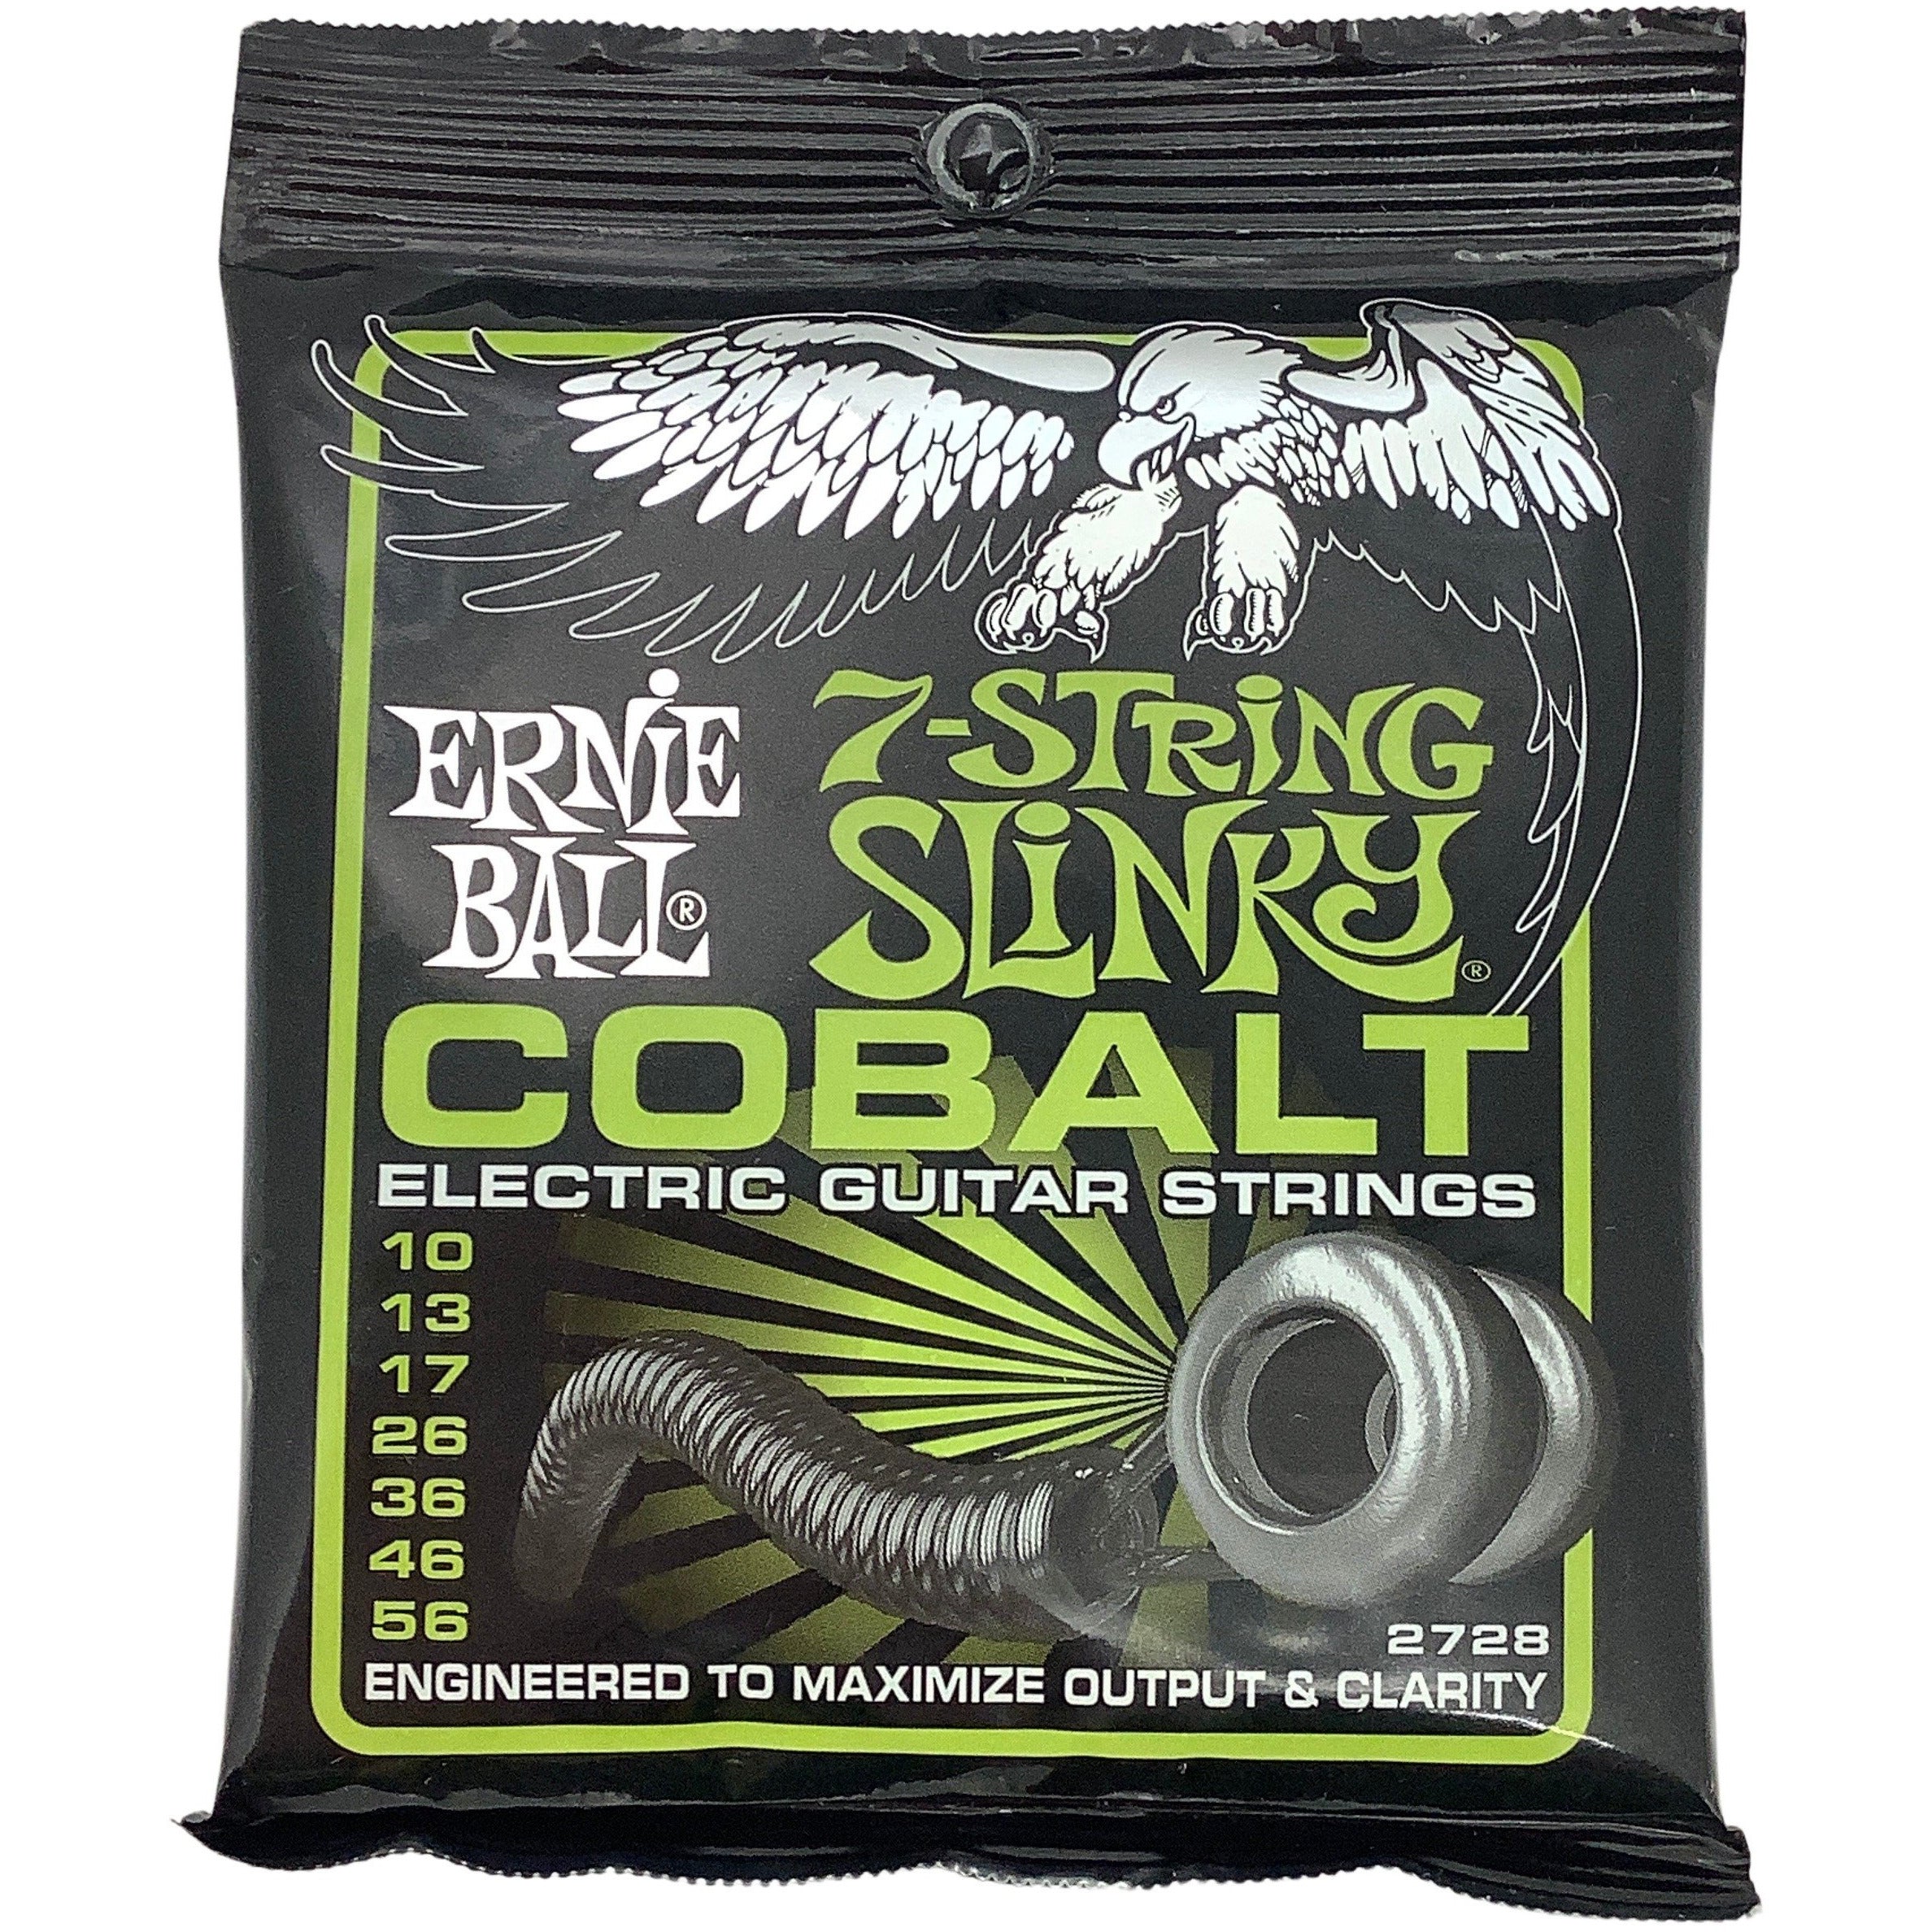 Ernie Ball Guitar String Set / Electric Guitar Strings